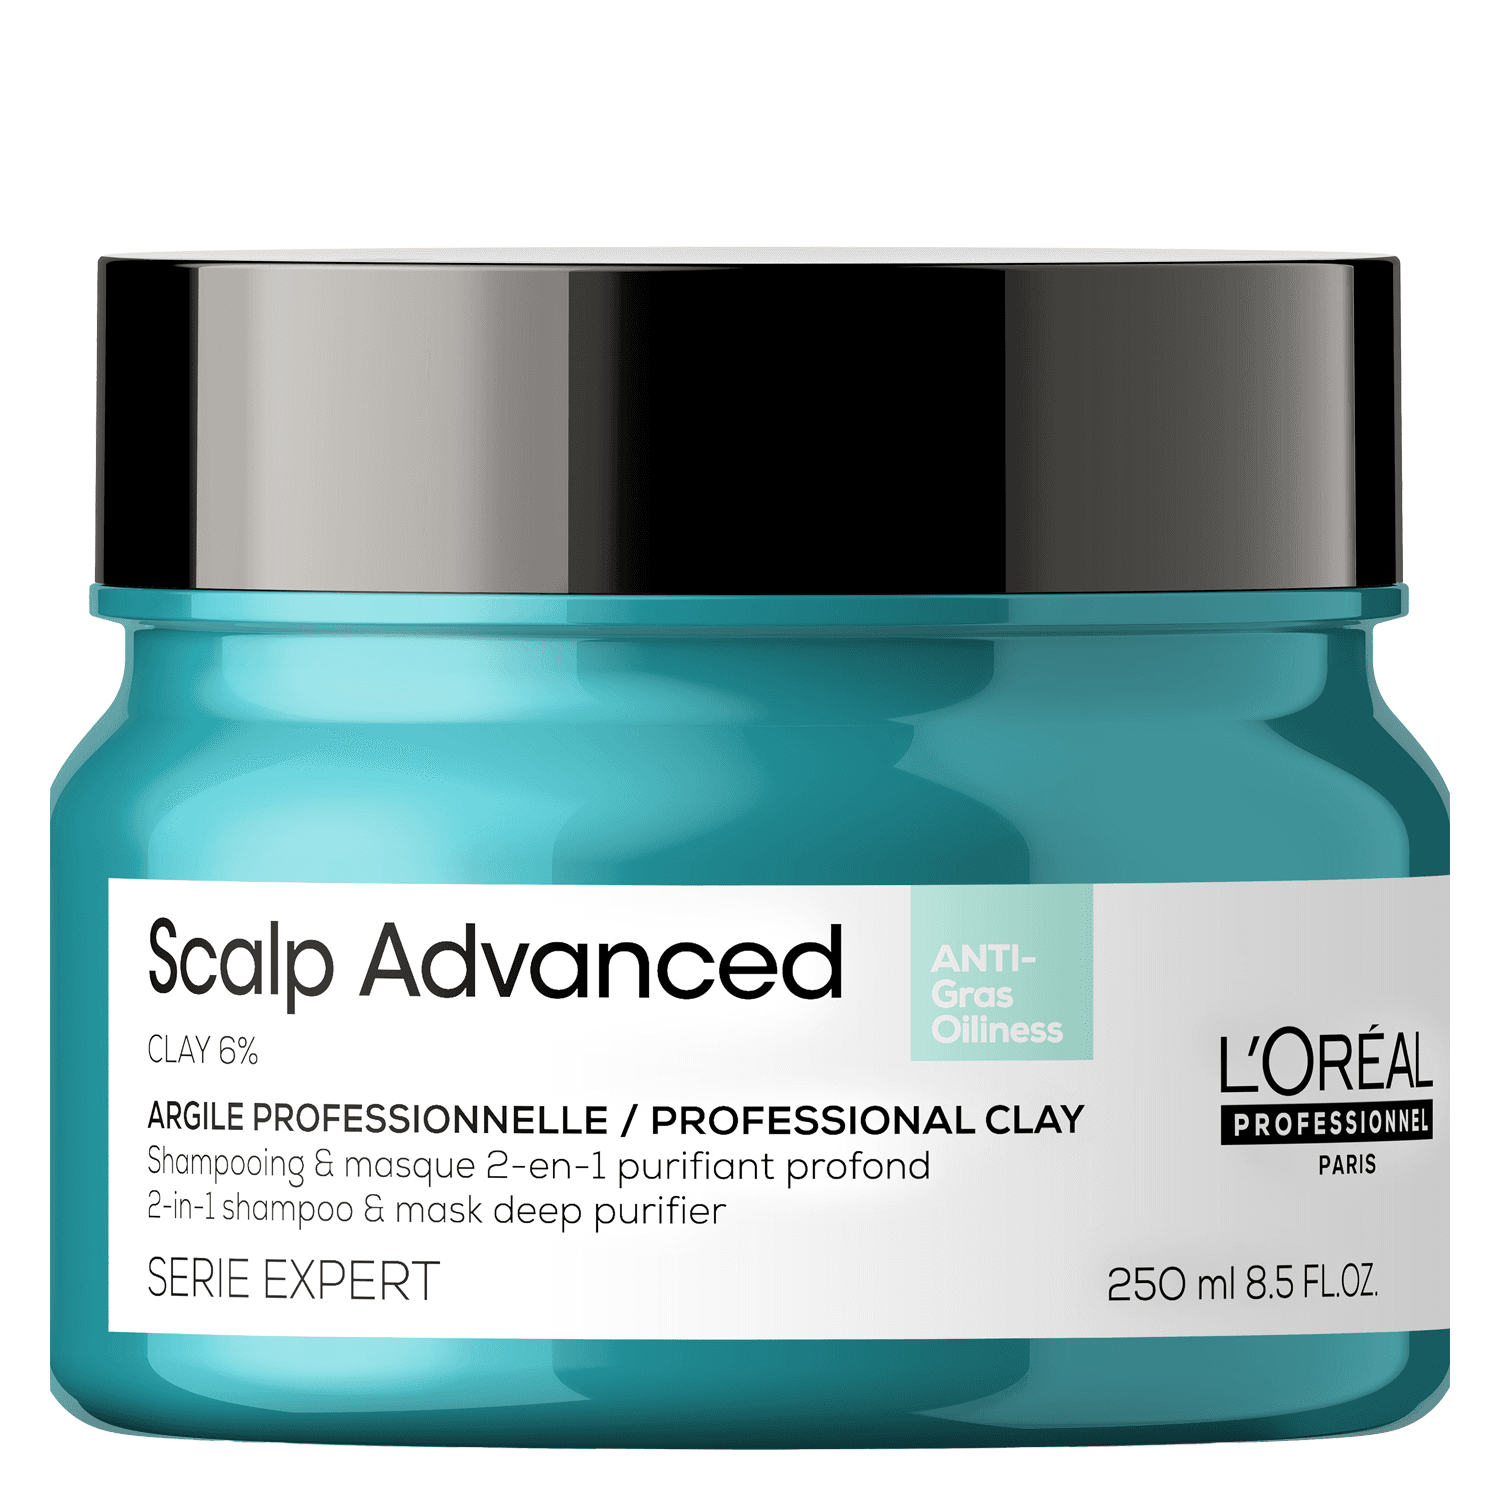 Série Expert Scalp Advanced - Anti-Oiliness 2in1 Deep Purifier Clay